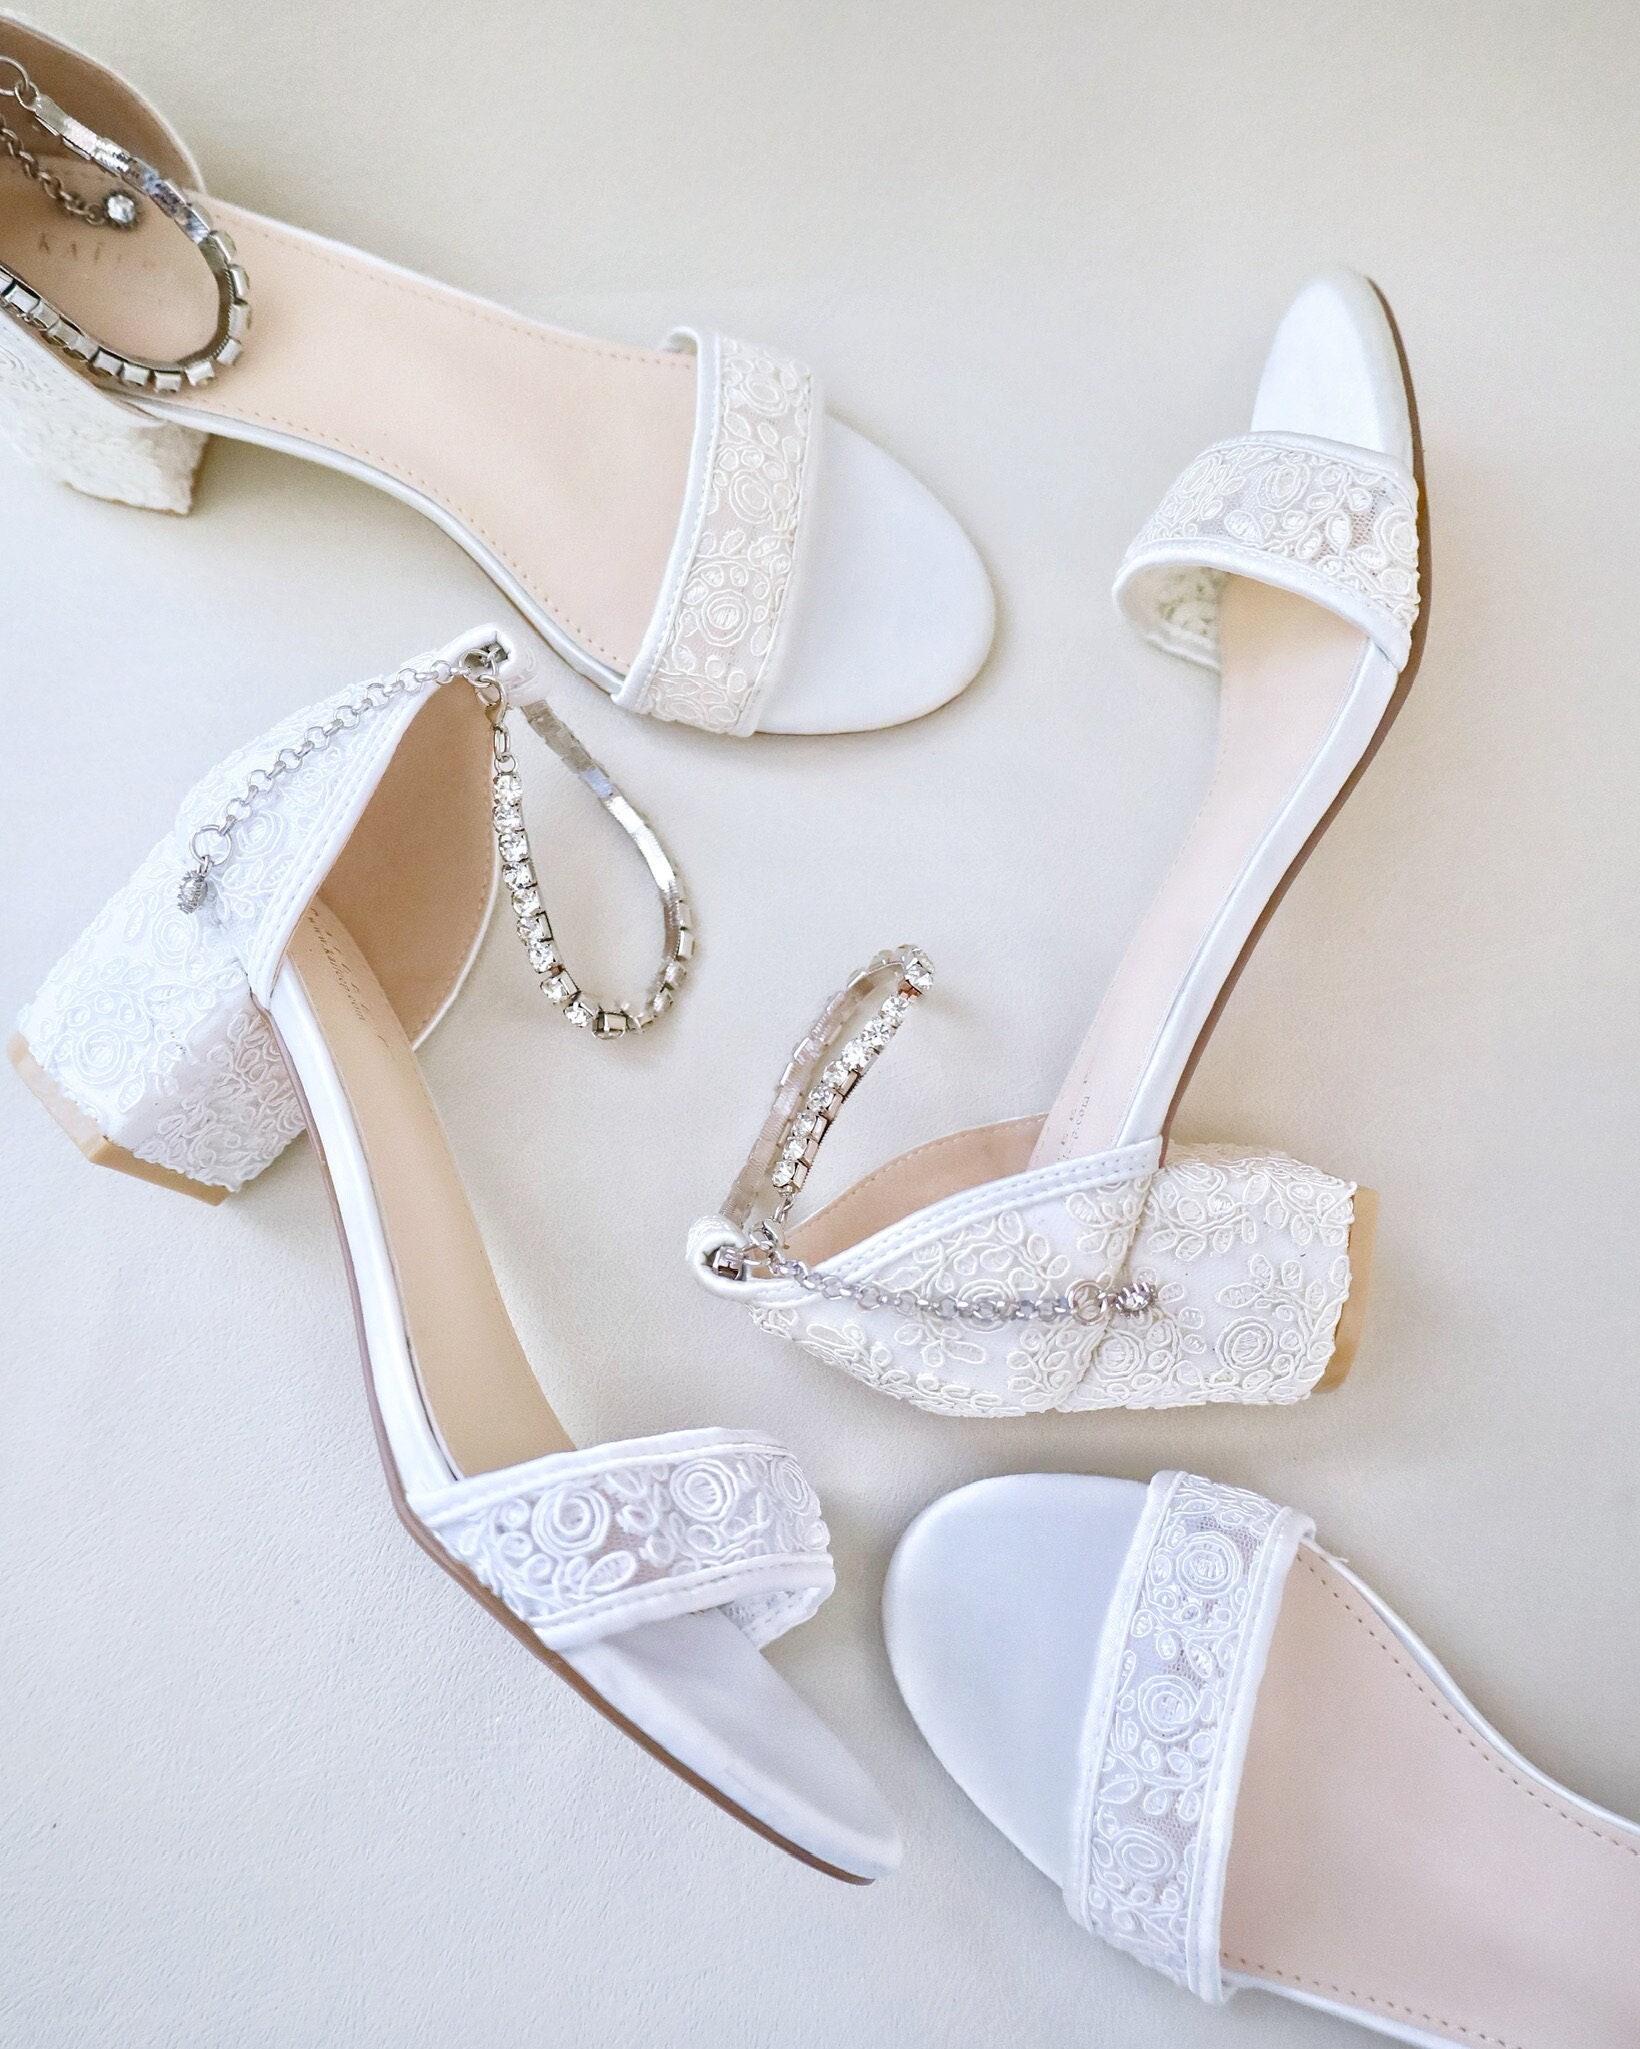 Buy White Heels Wedding Online In India - Etsy India